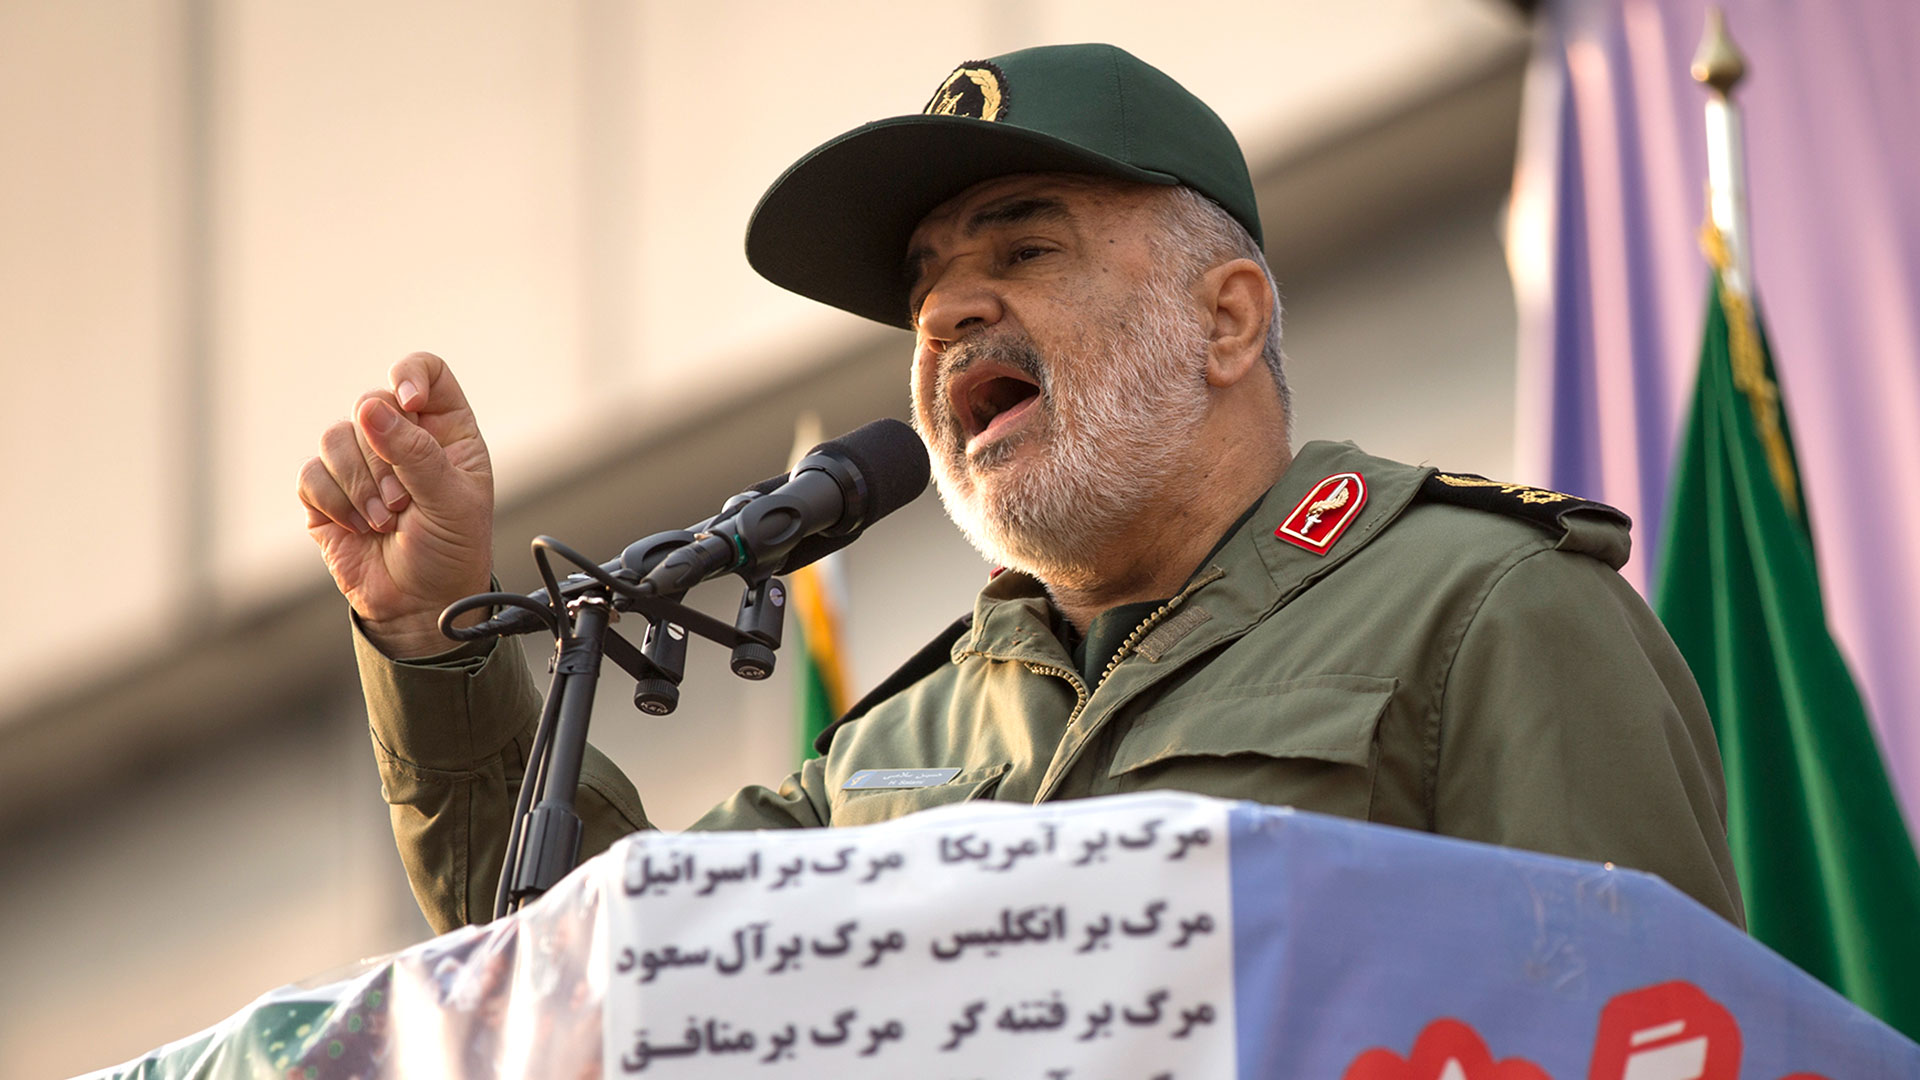 The head of the Iranian Revolutionary Guard, Hosein Salami